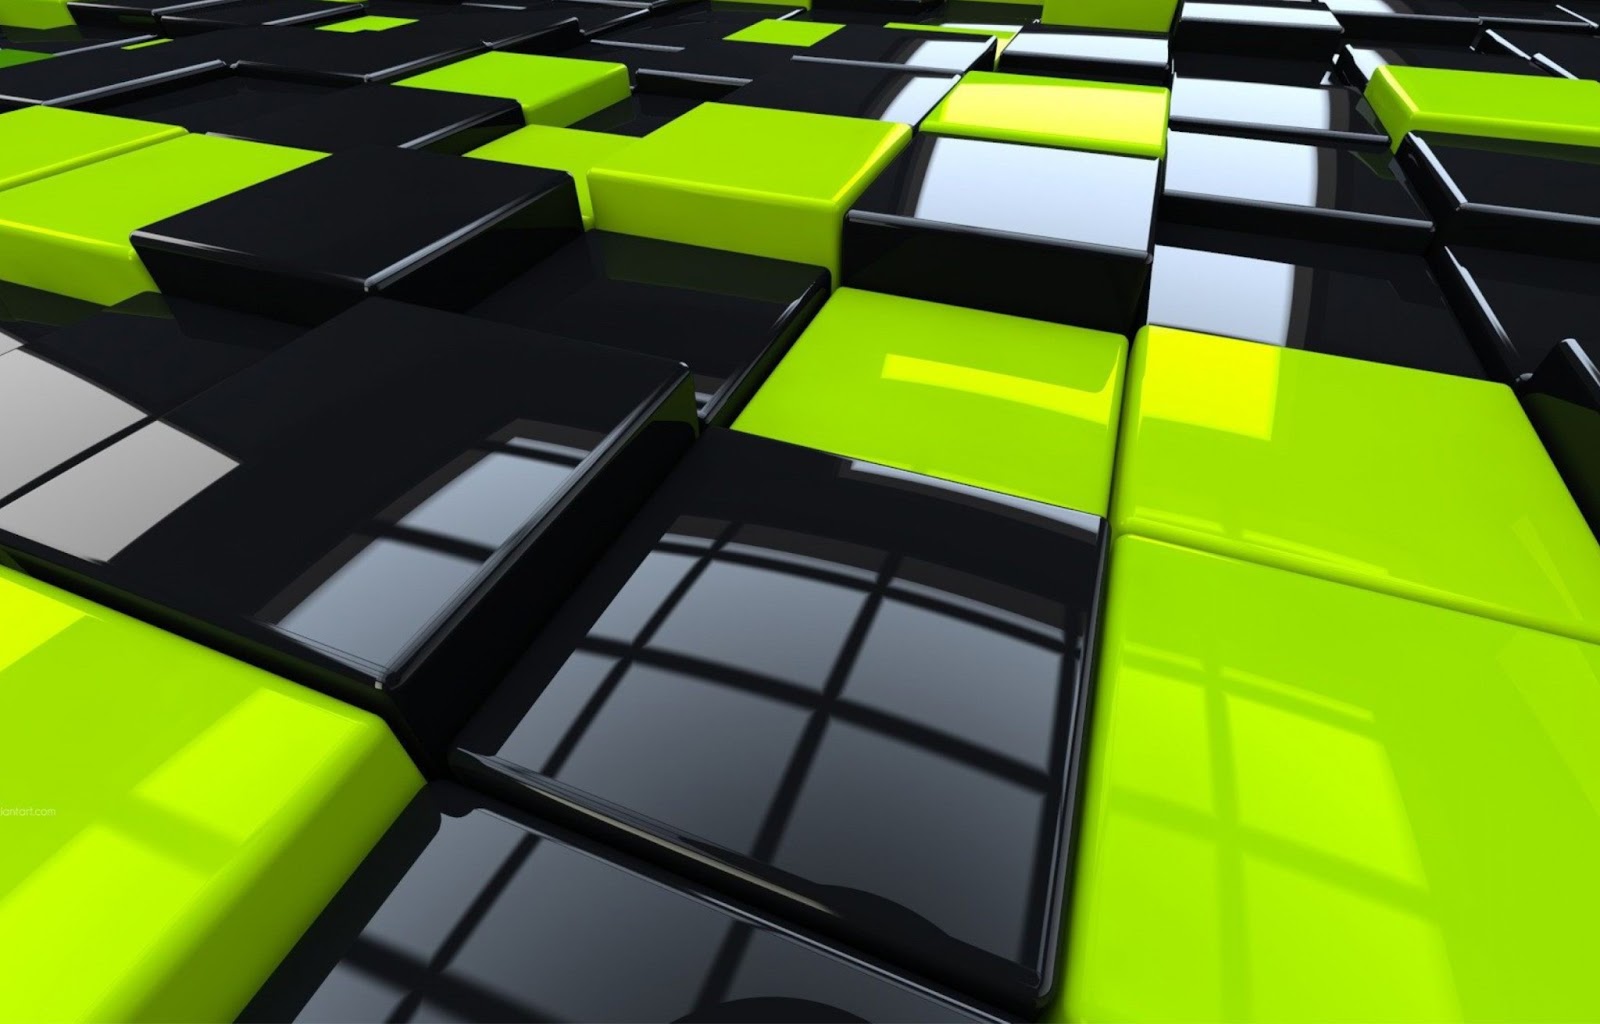 Blocks Hd Wallpapers 1080p - Black And Green Cubes - HD Wallpaper 